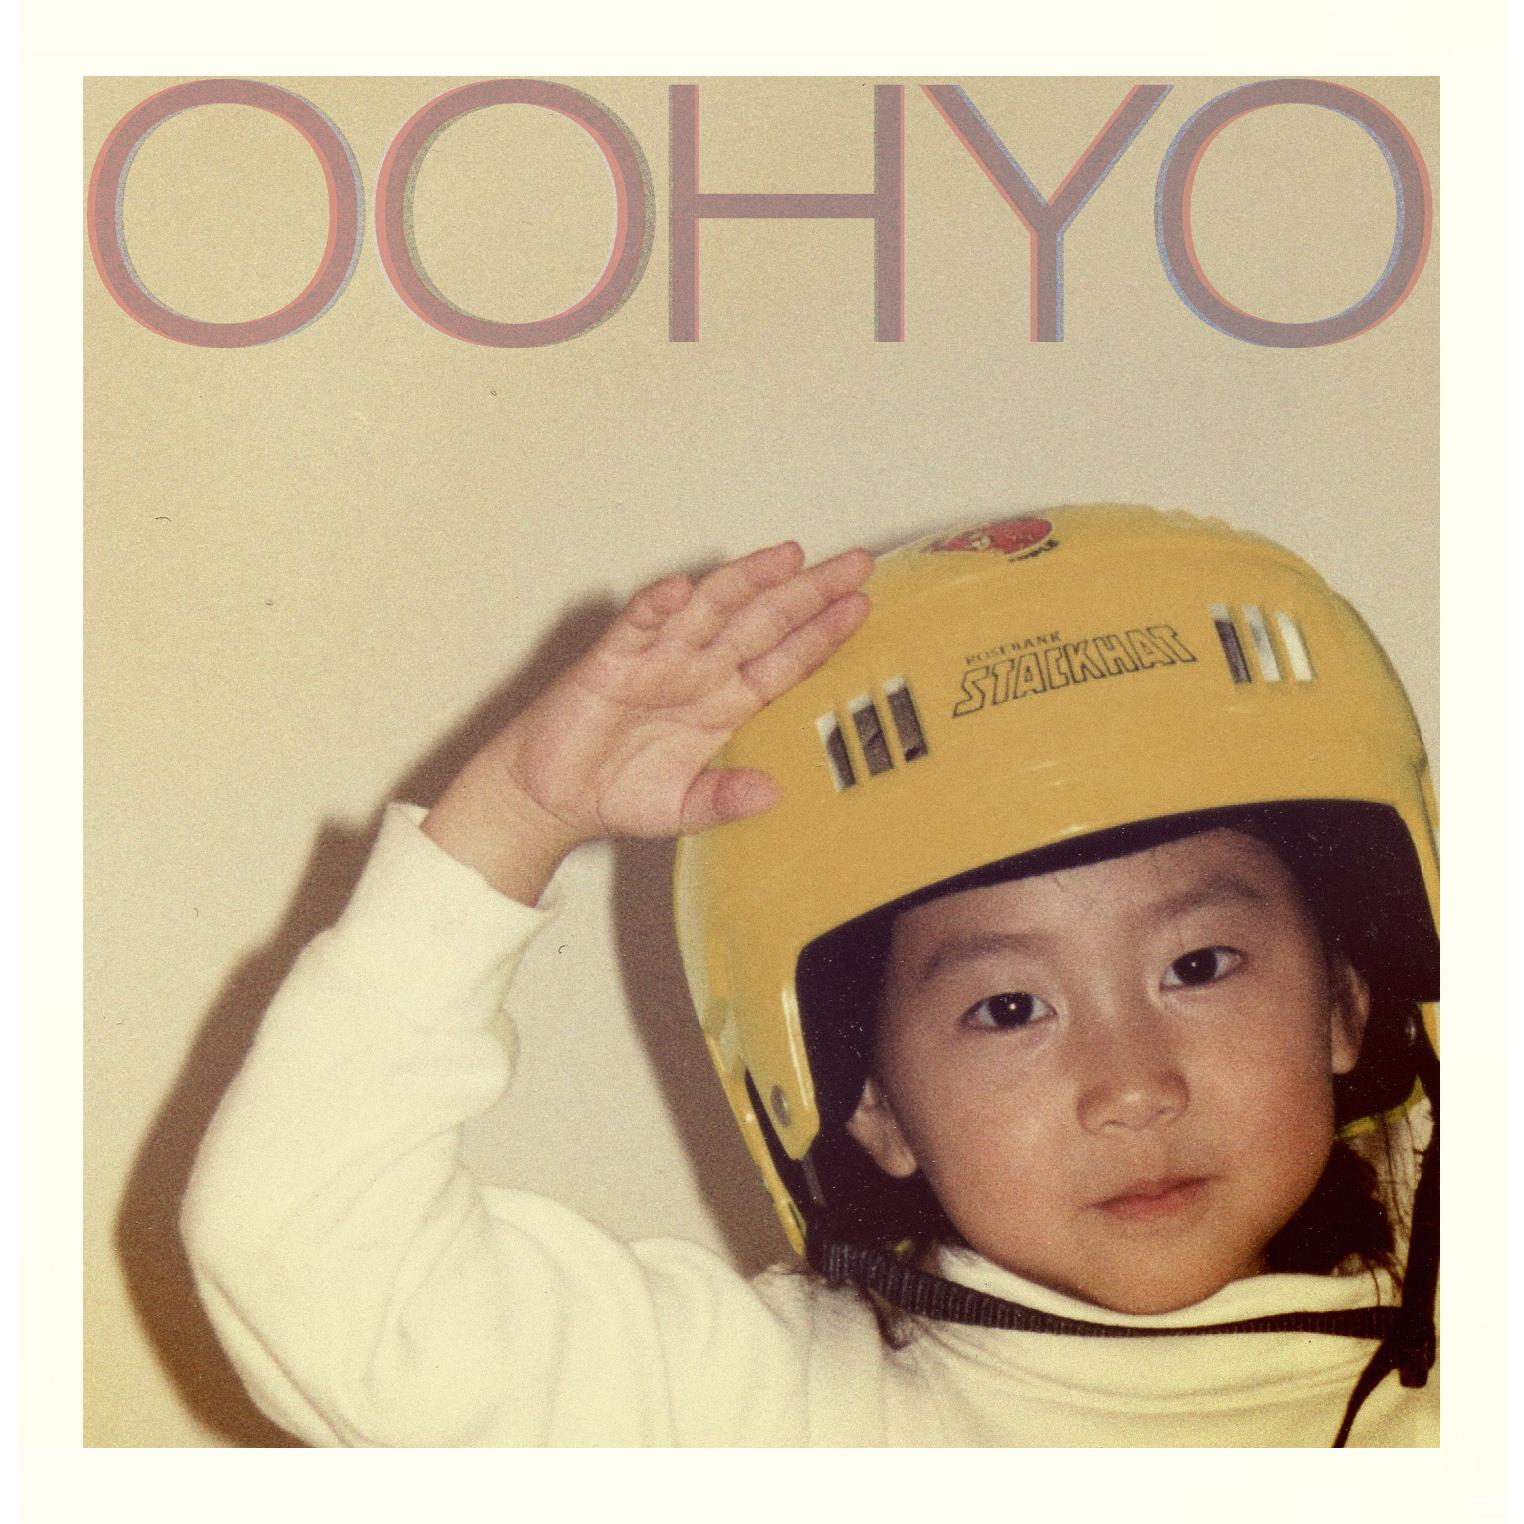 Oohyo - Piano Dust